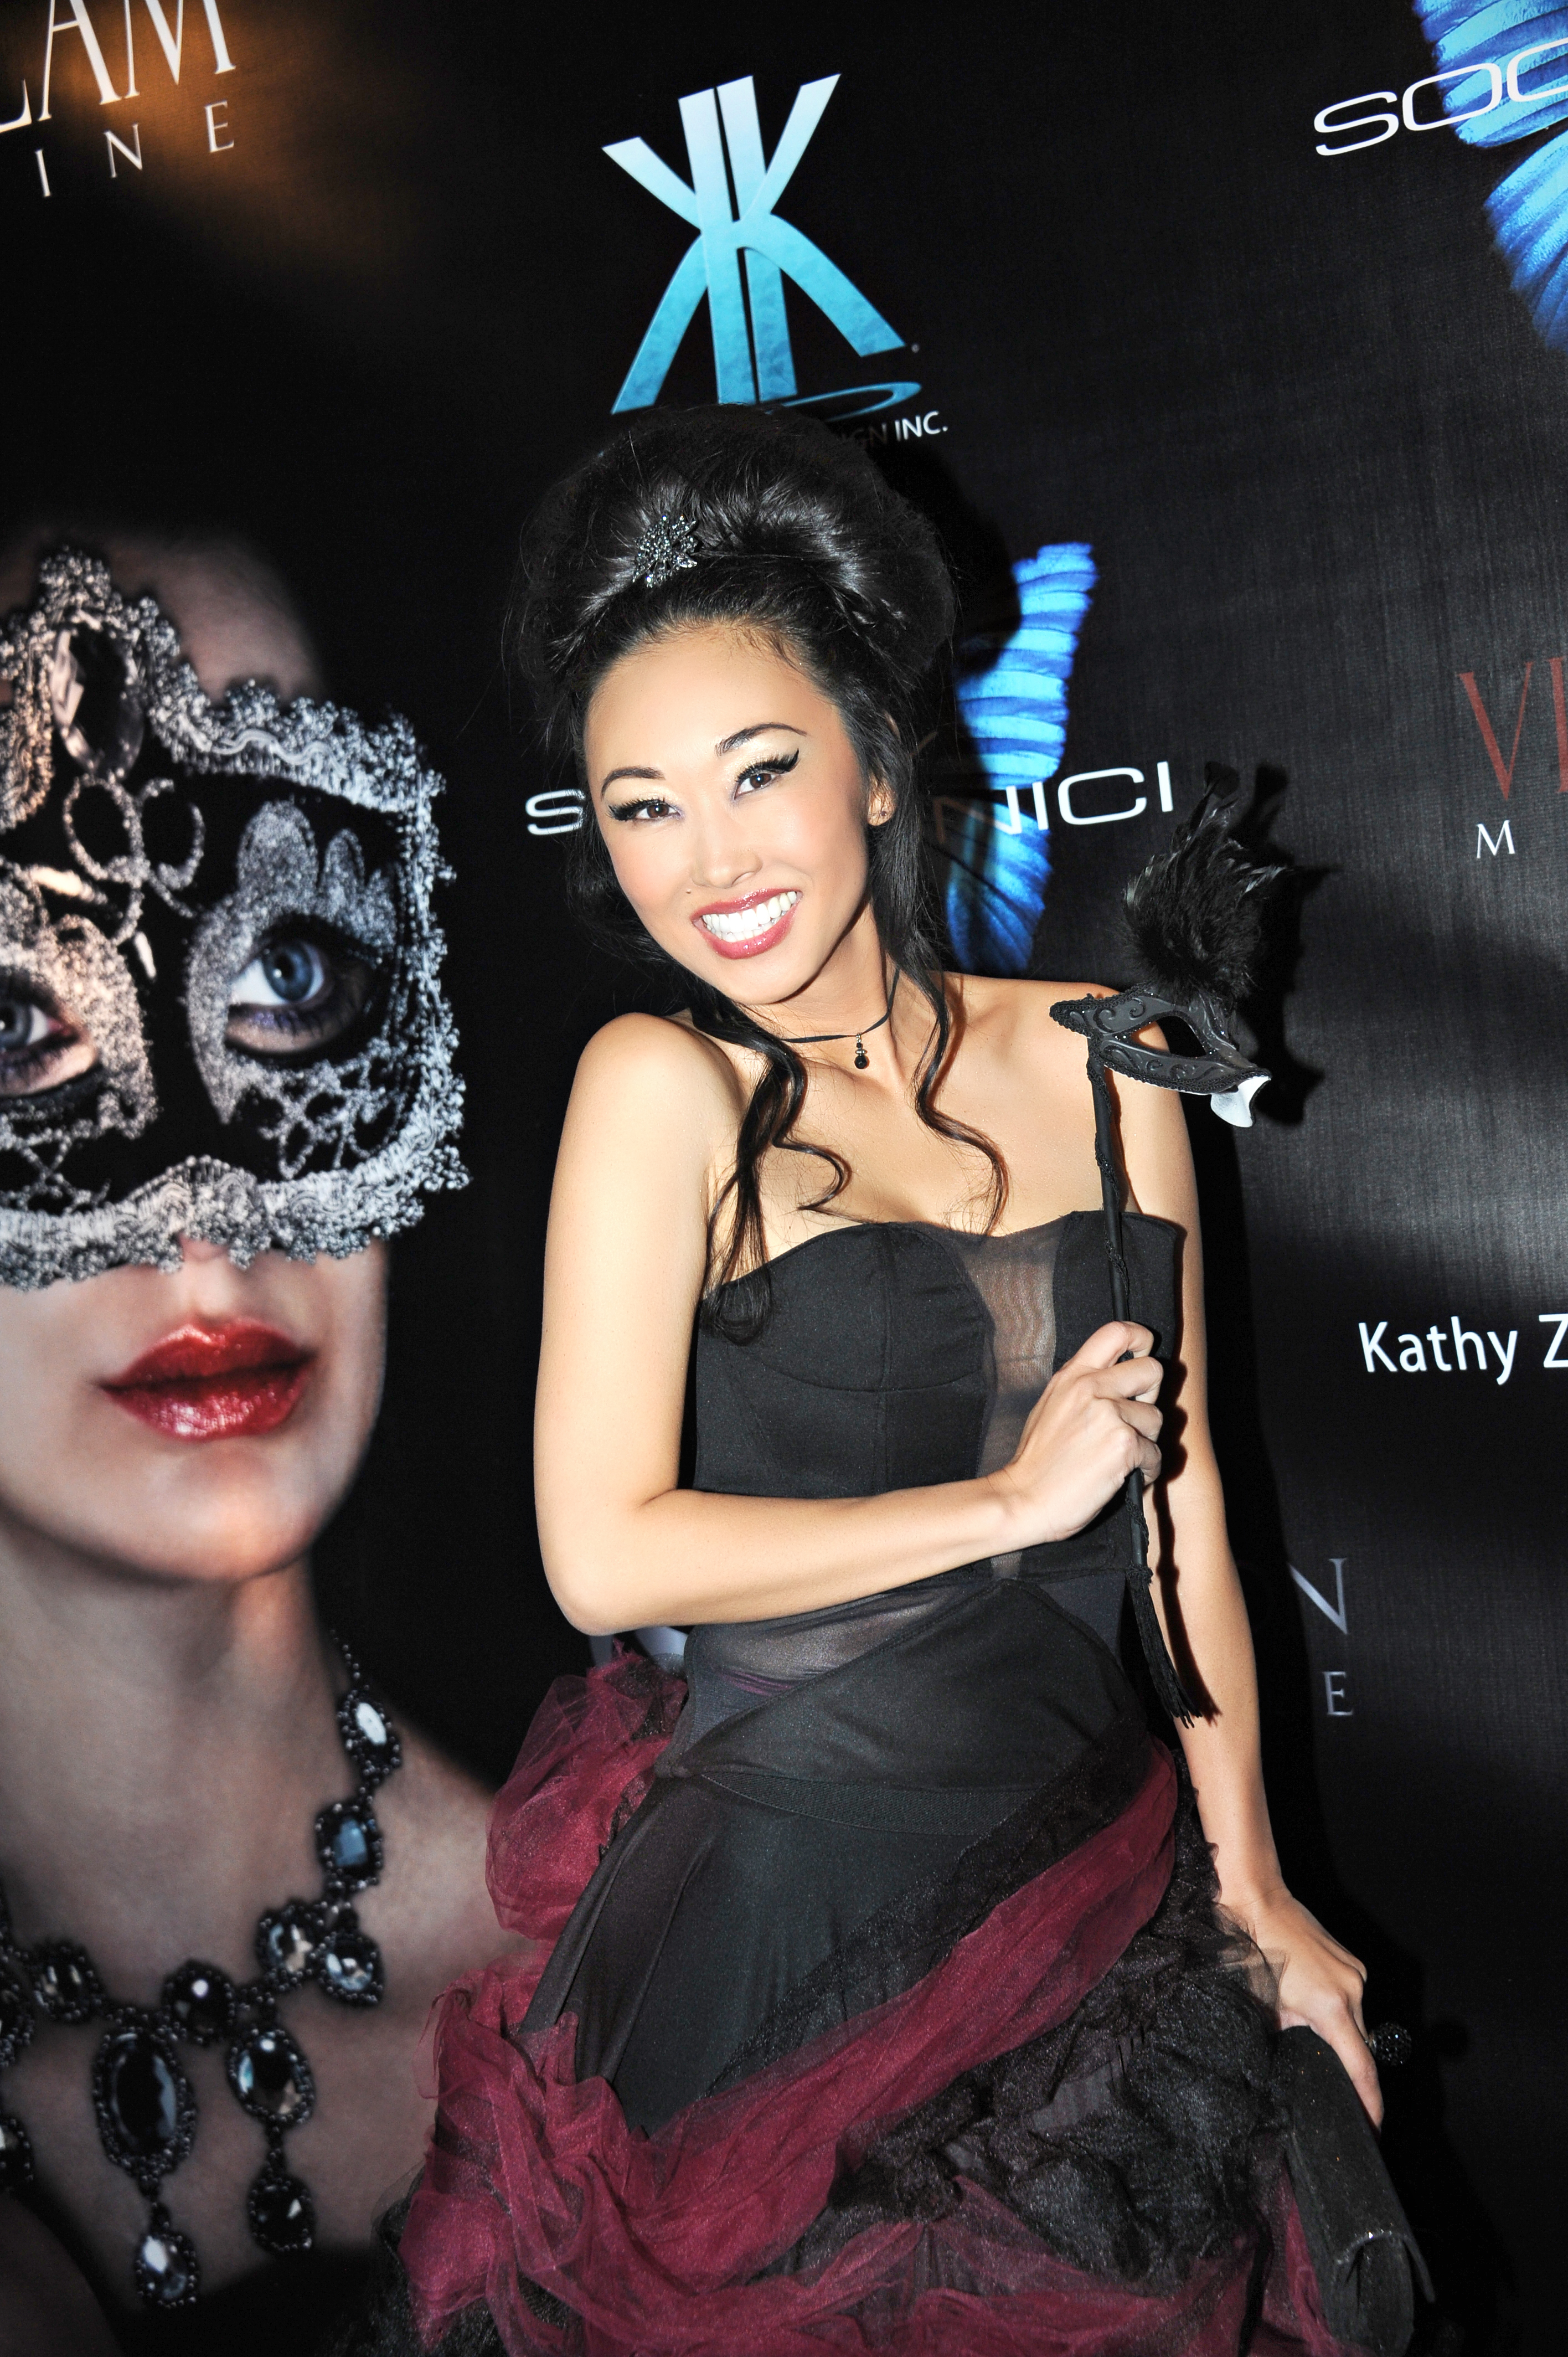 Candace Kita attends the Viva Glam Magazine Masquerade Ball at Unici Casa in Los Angeles, CA. November 17, 2013.